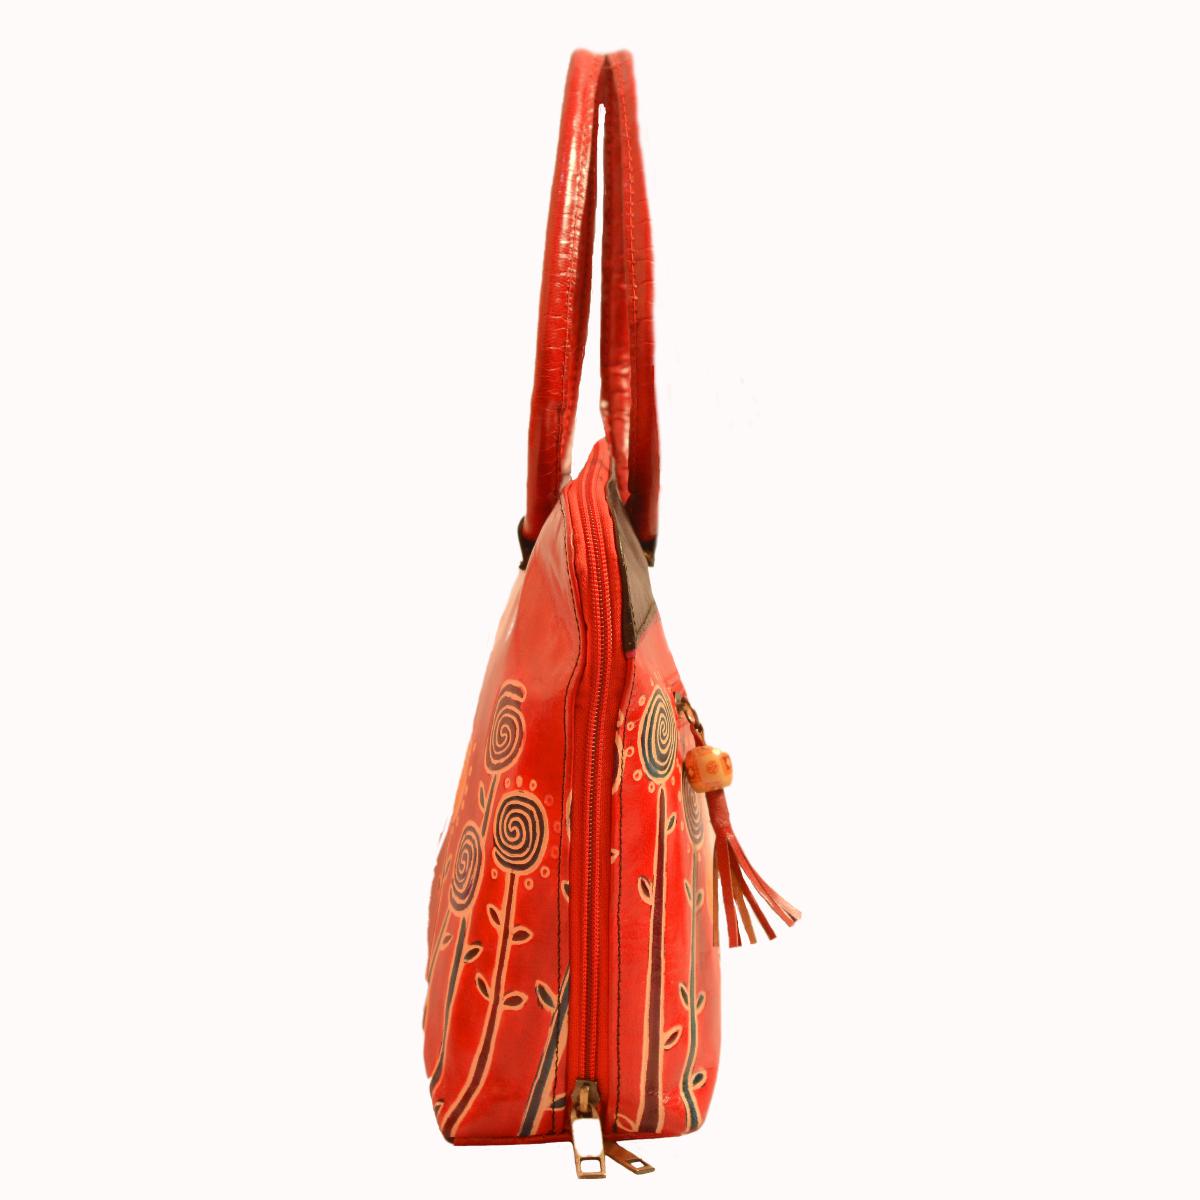 Shantiniketan leather - Women's handbag small